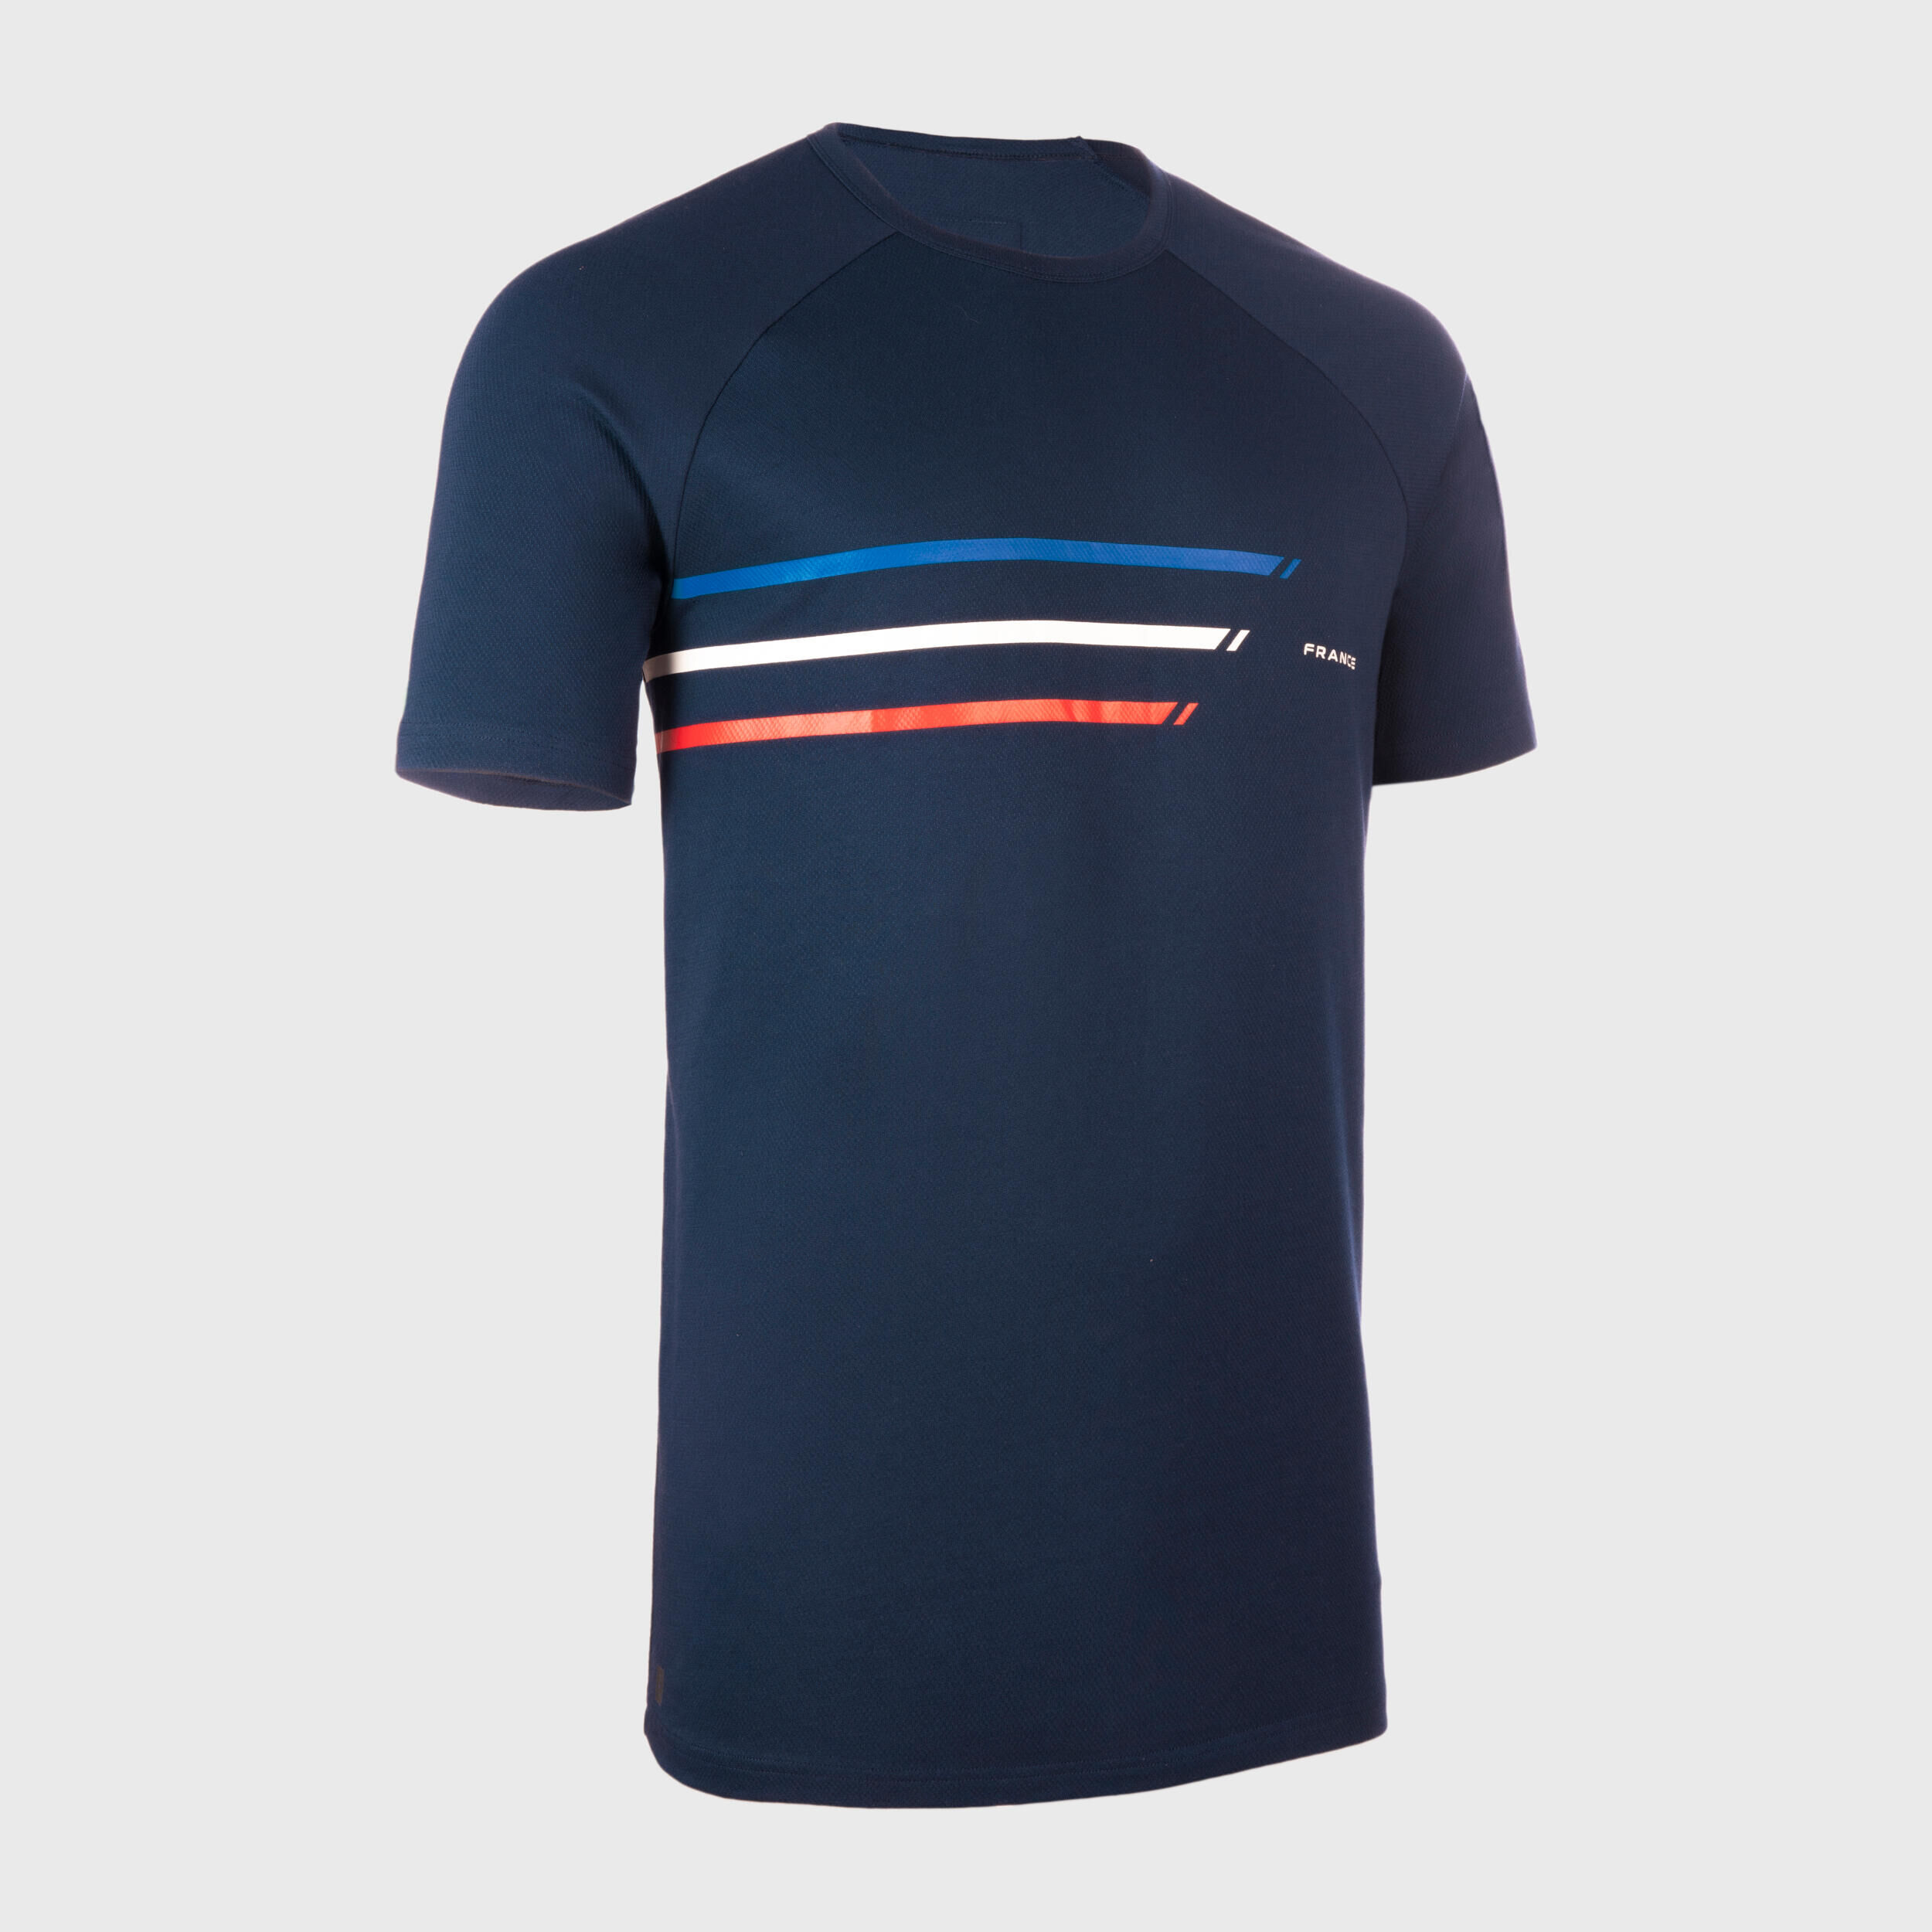 OFFLOAD Men's/Women's Short-Sleeved T-Shirt R100 - France/Blue